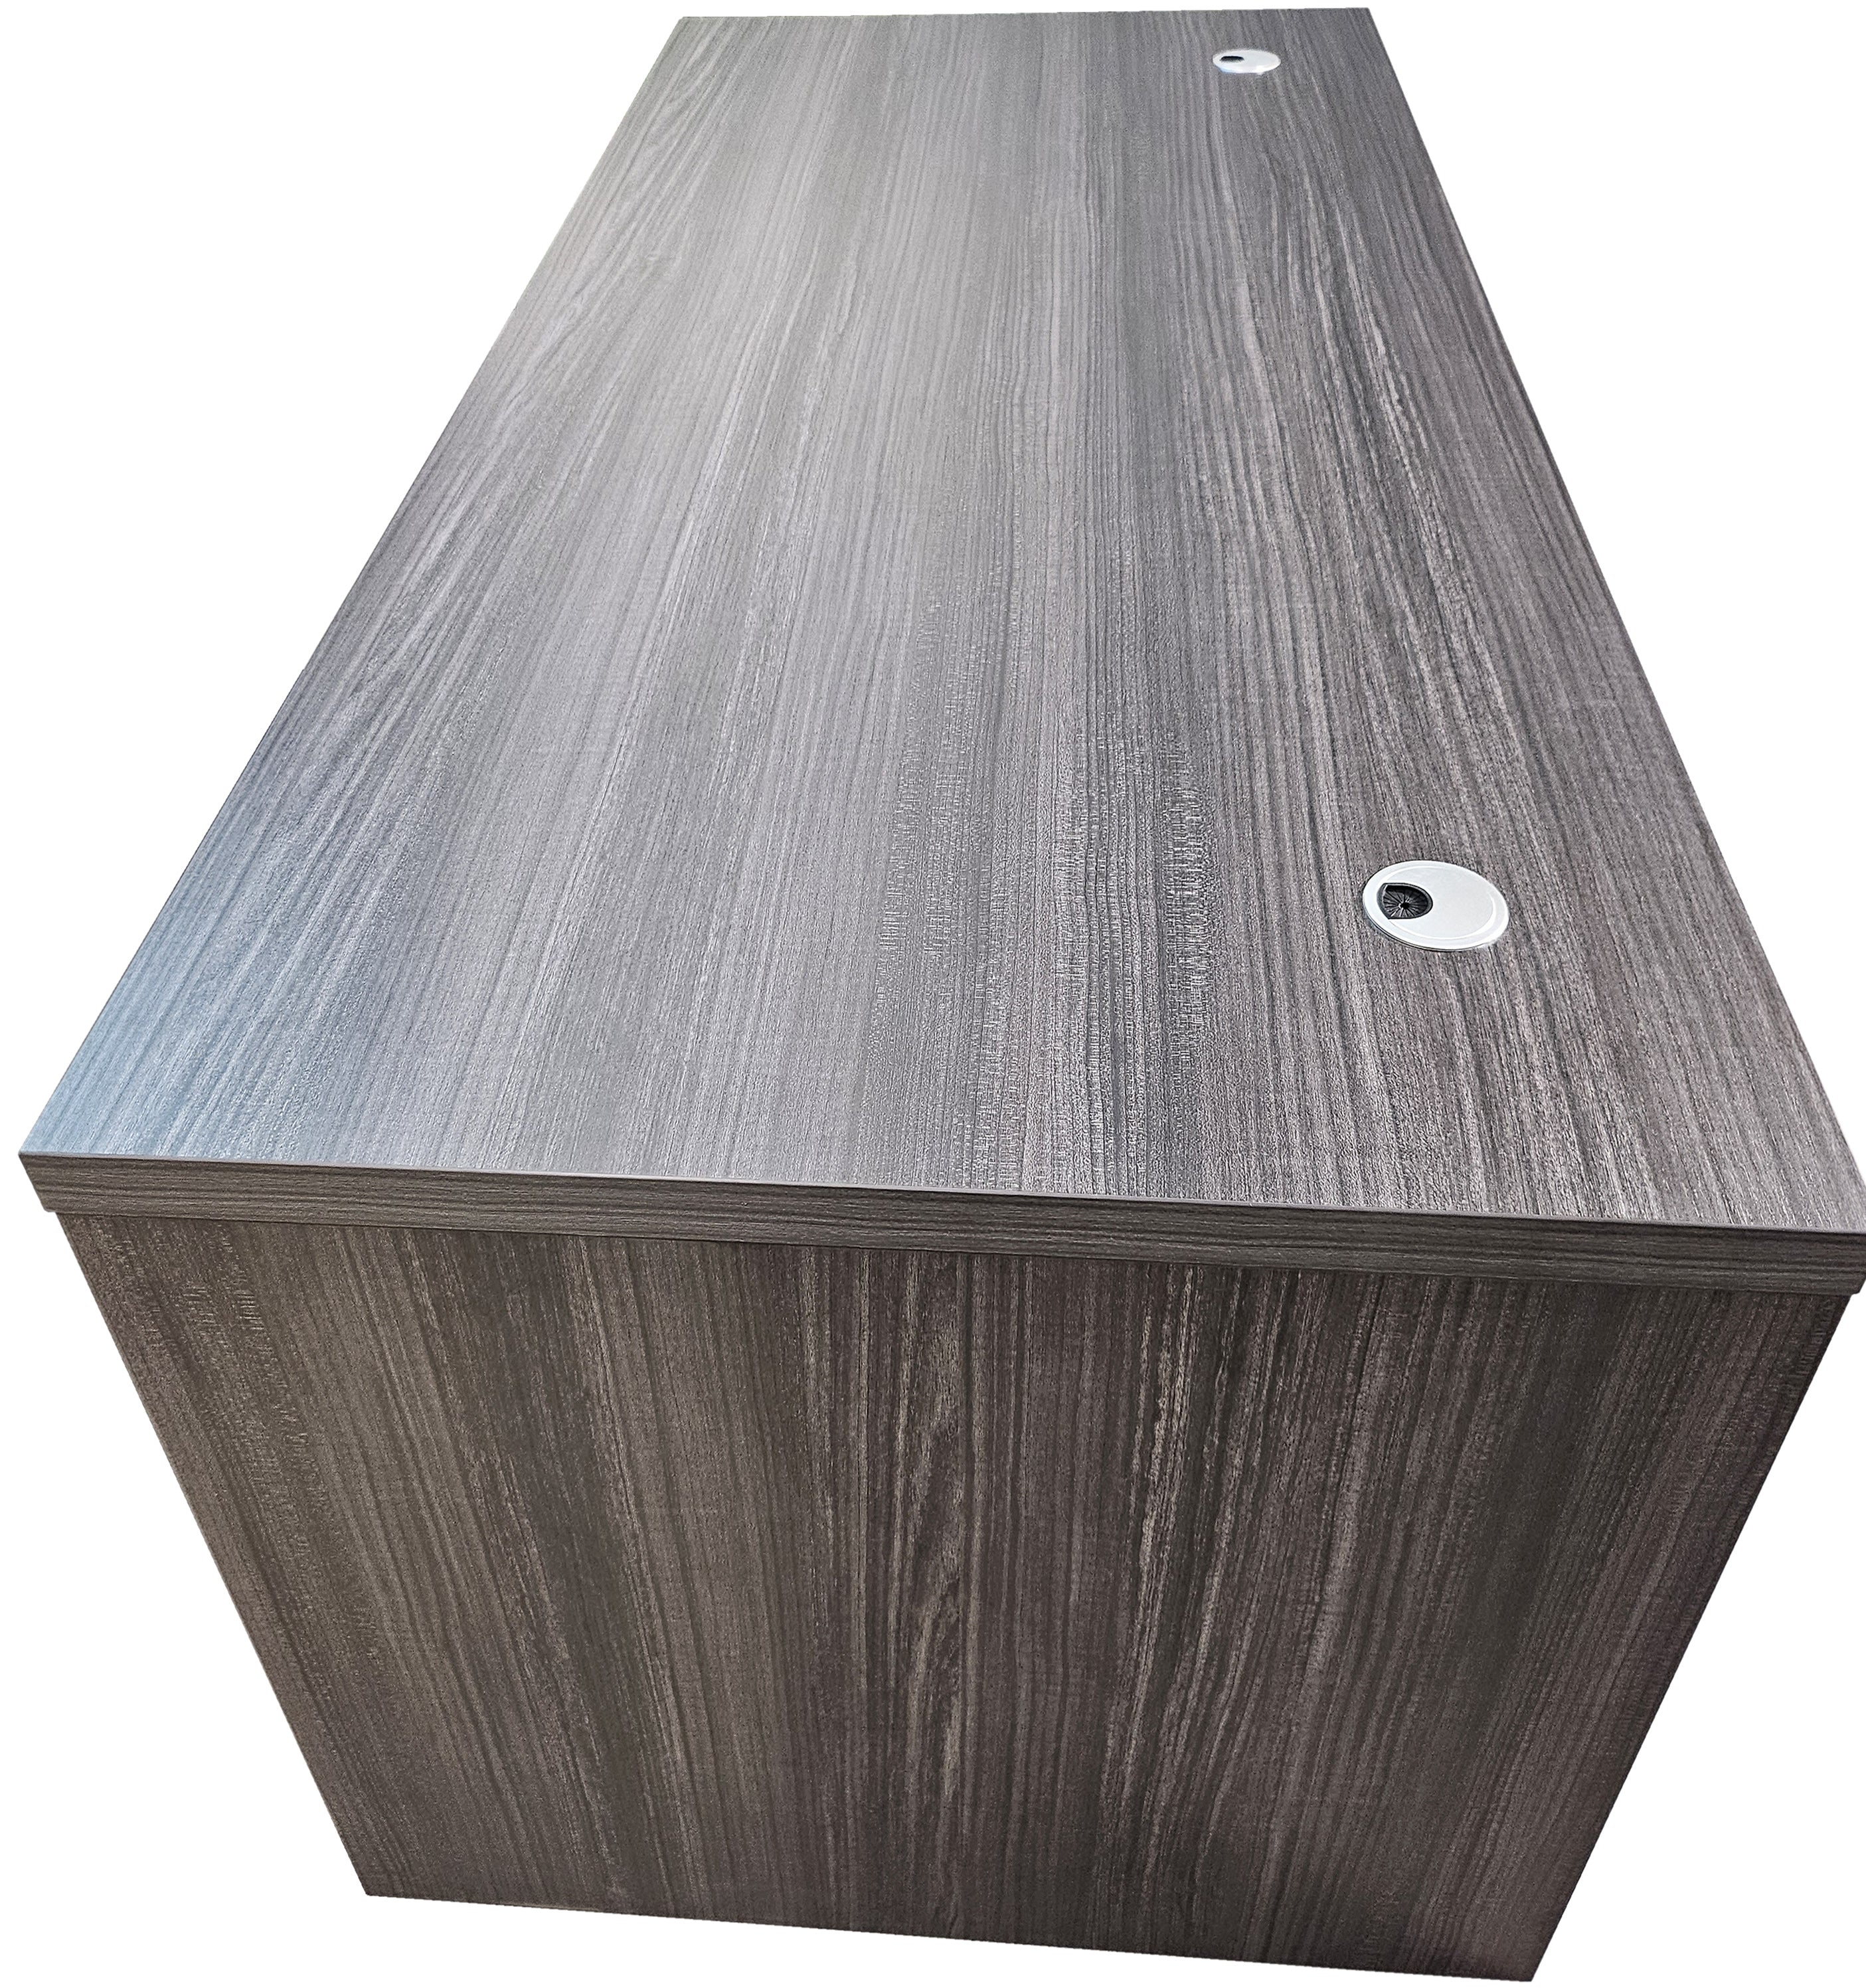 Modern Grey Oak Veneer Executive Office Desk - 2000mm - DG17-D20GR